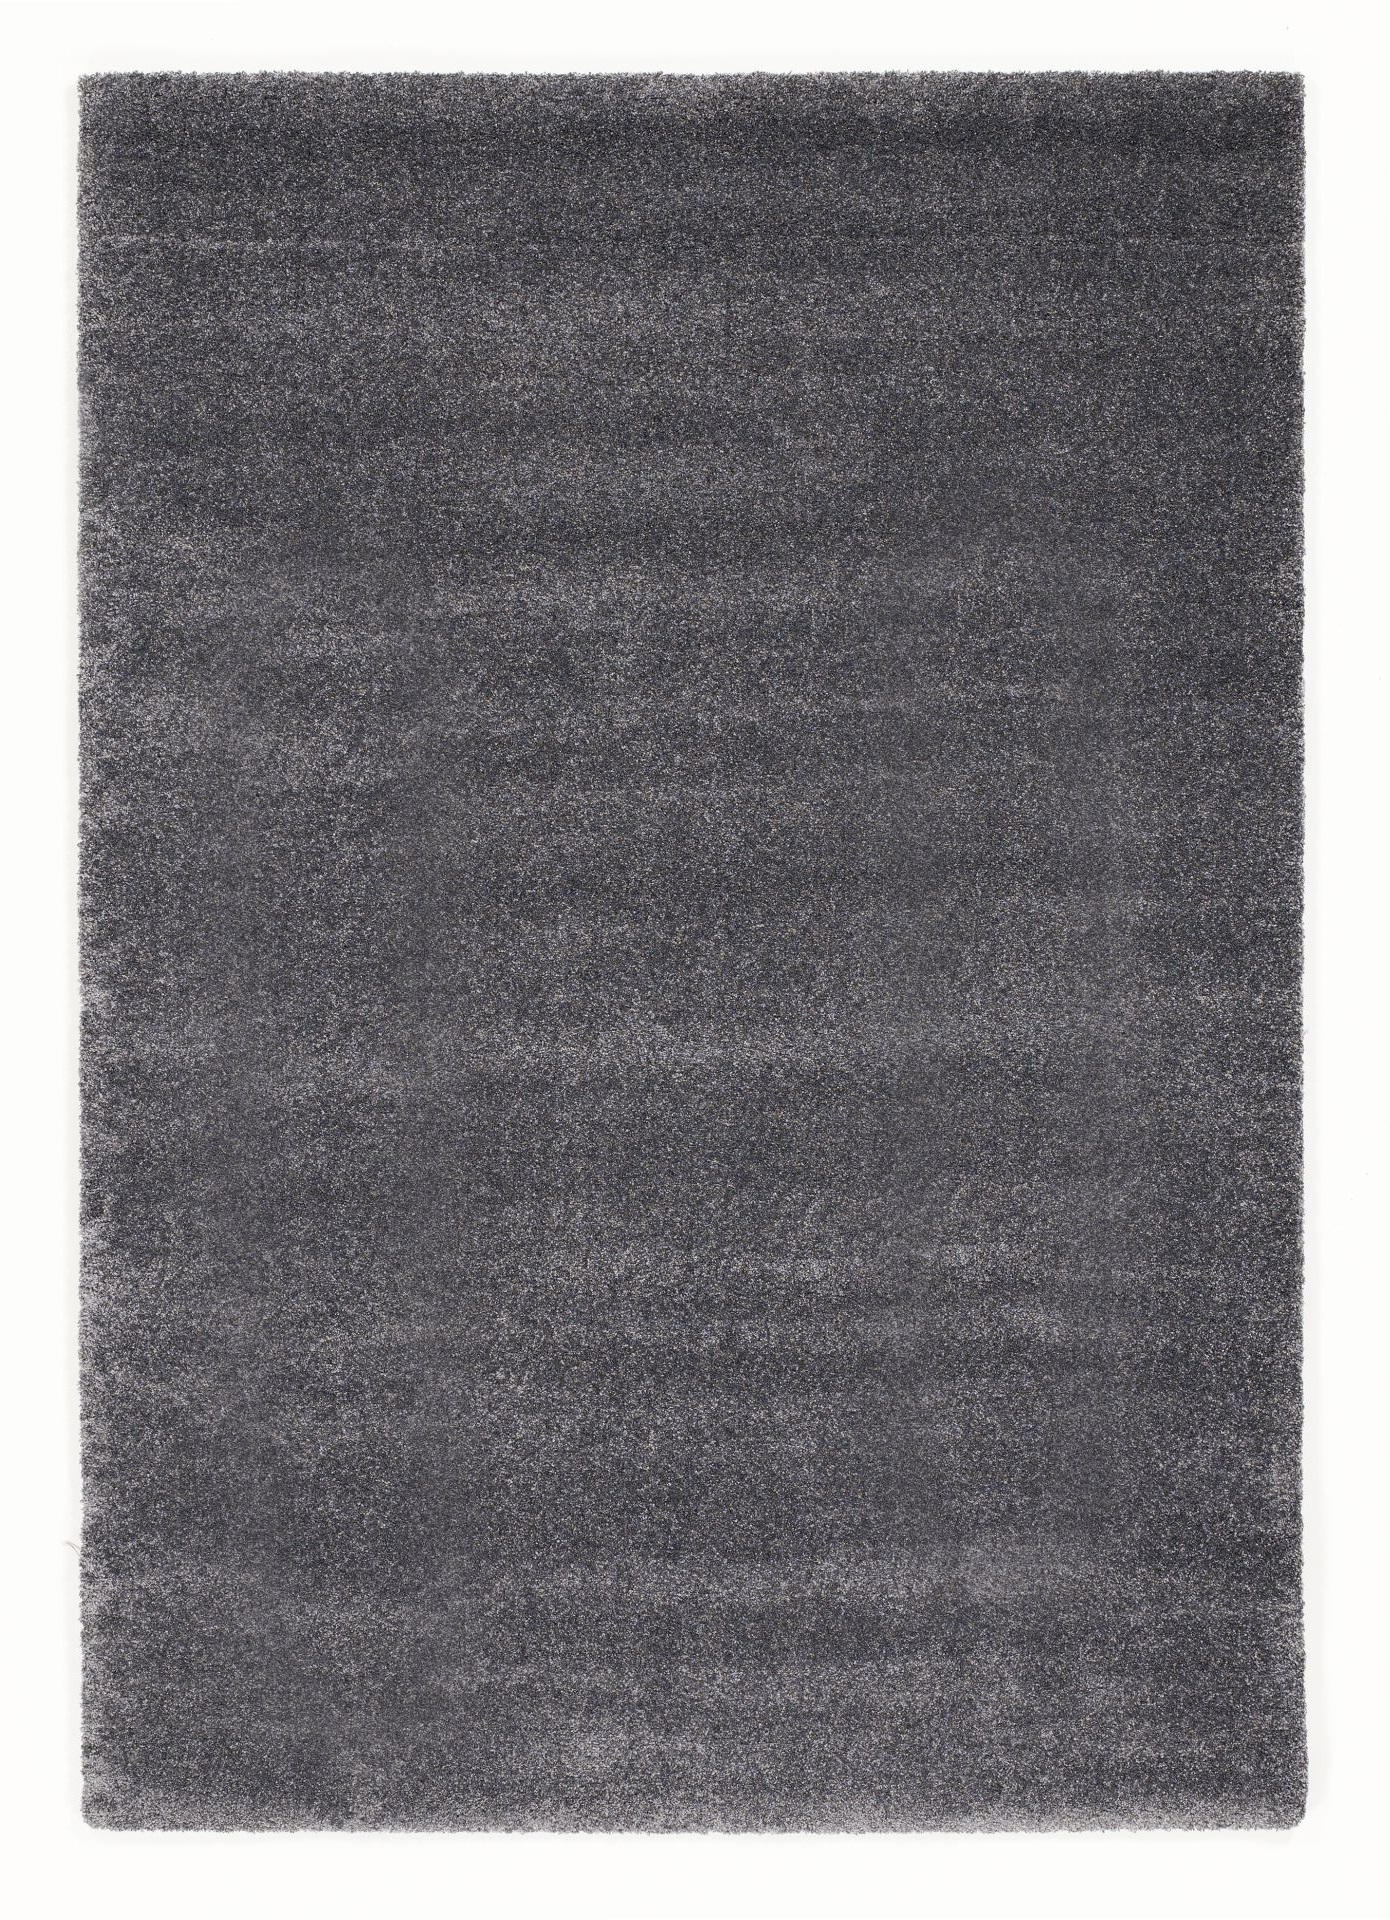 HOCHFLORTEPPICH  65/130 cm  gewebt  Dunkelgrau   - Dunkelgrau, Basics, Textil (65/130cm) - Novel